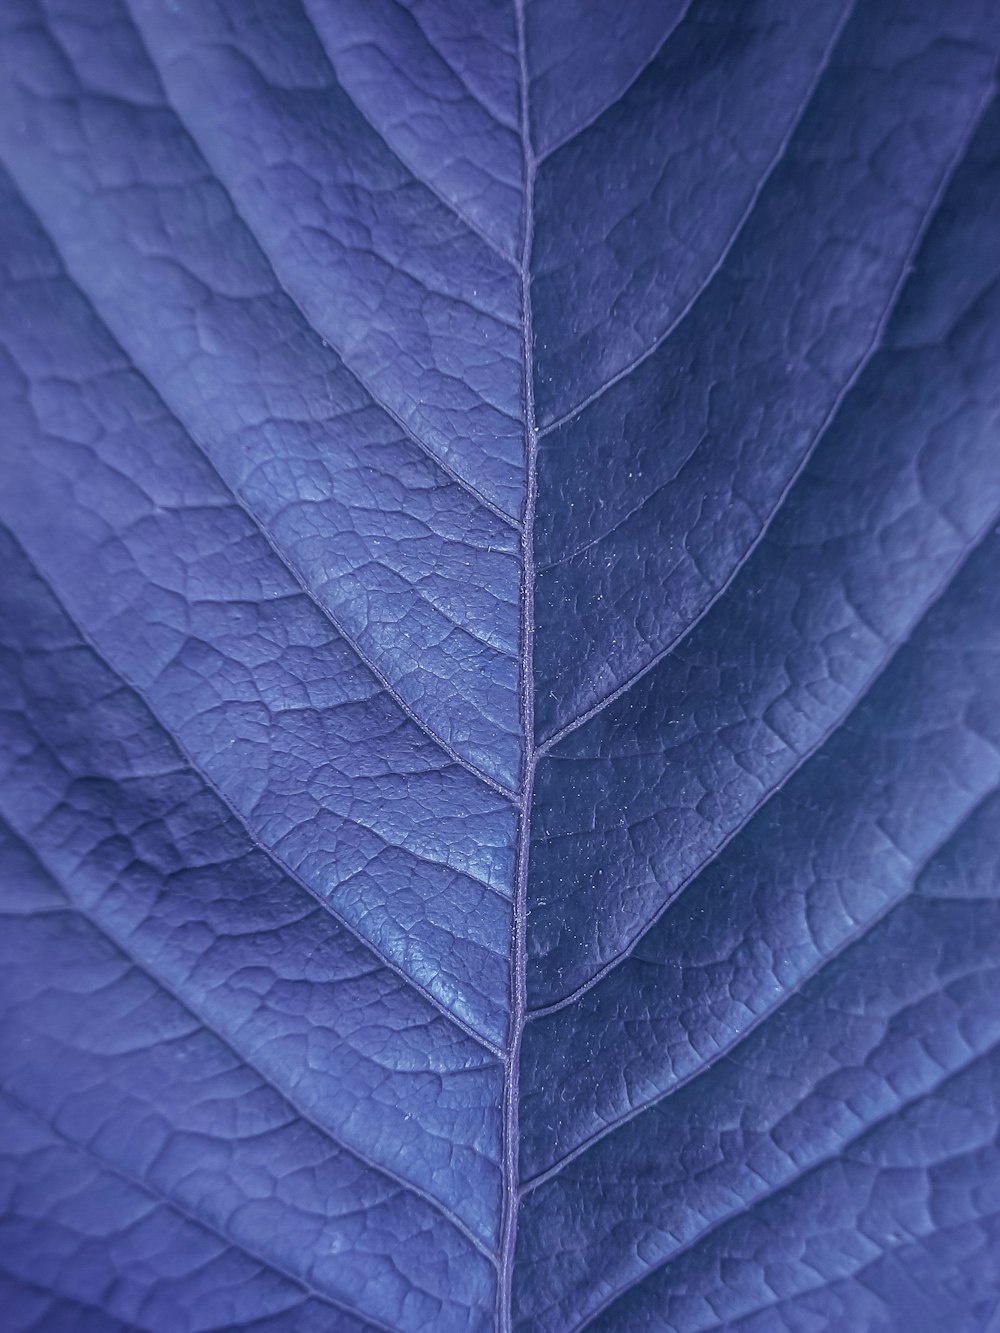 a close up view of a purple leaf